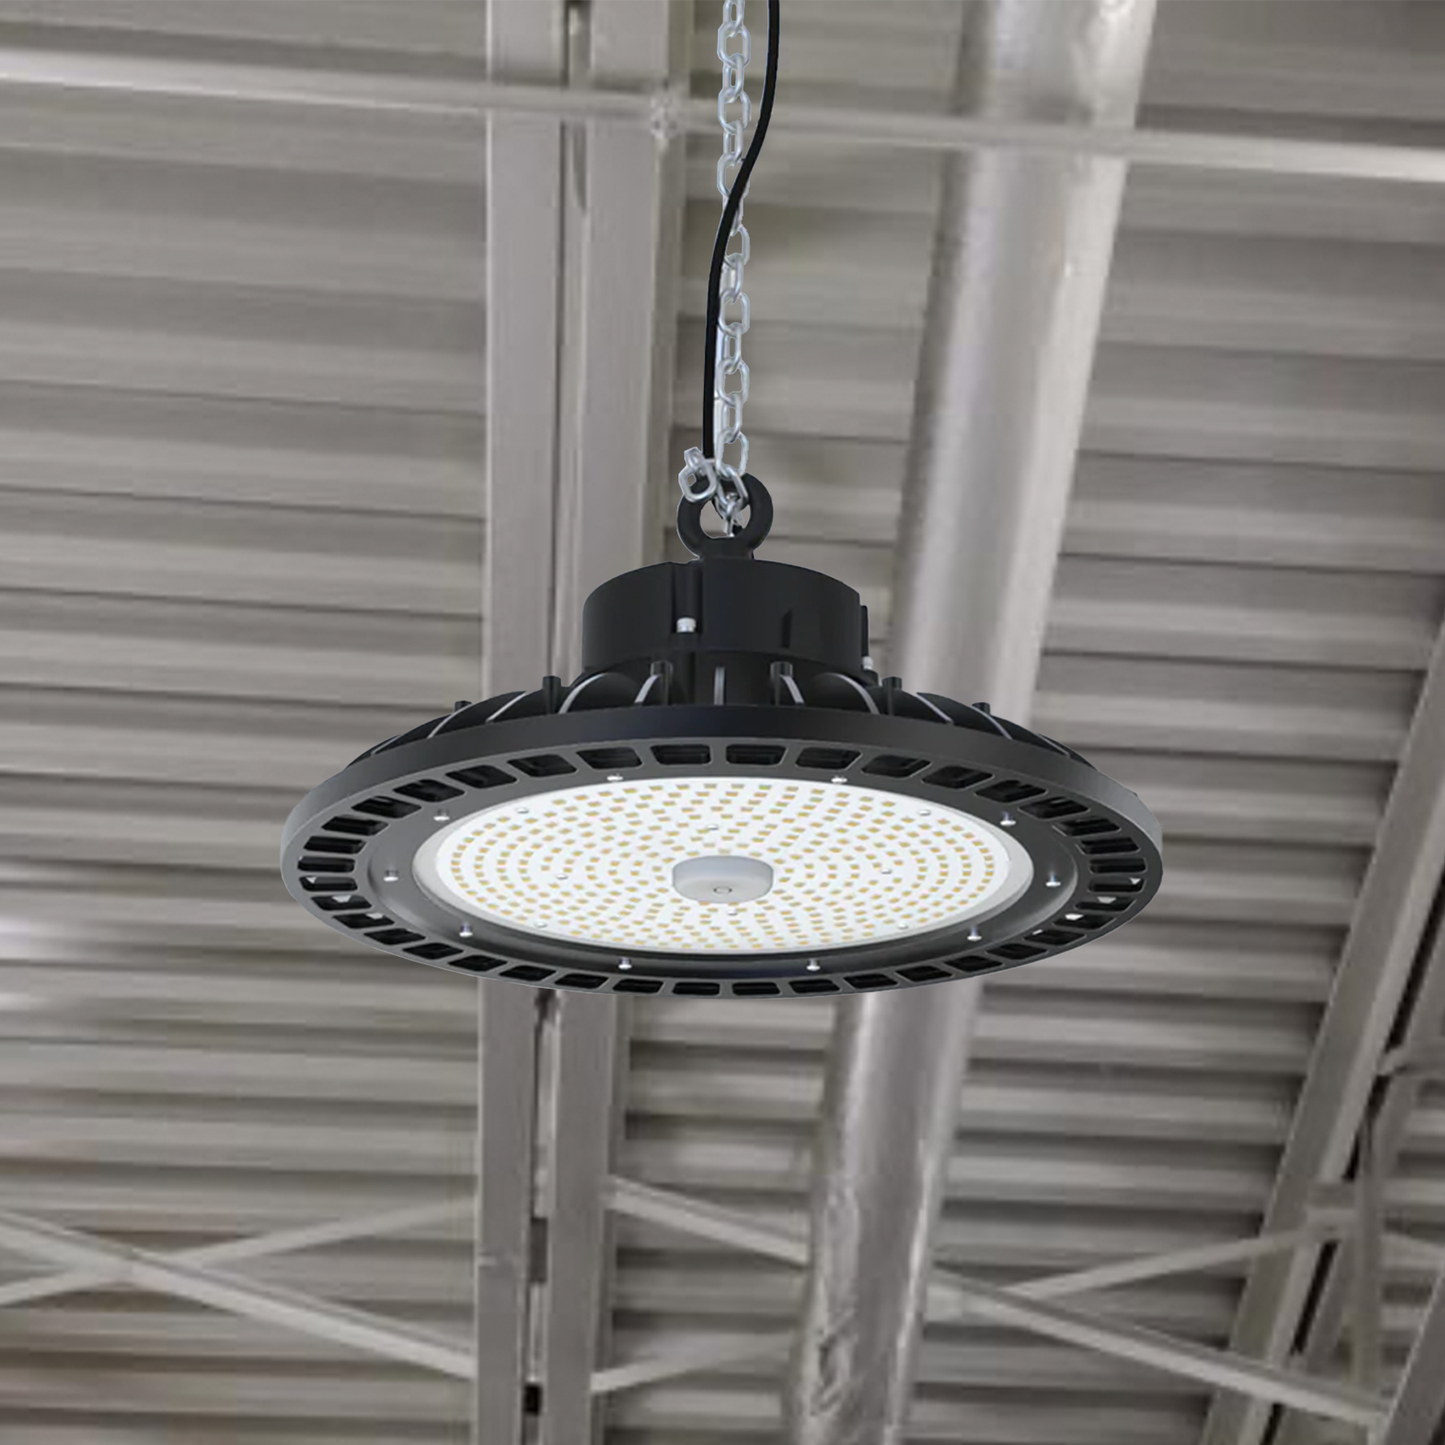 UFO LED High Bay Light 150W 4000K Cool White 21750LM UL, DLC Listed, IP65, 1-10V Dimmable, For LED Warehouse Lighting Retail Workshop Garage Factory Barn Lighting